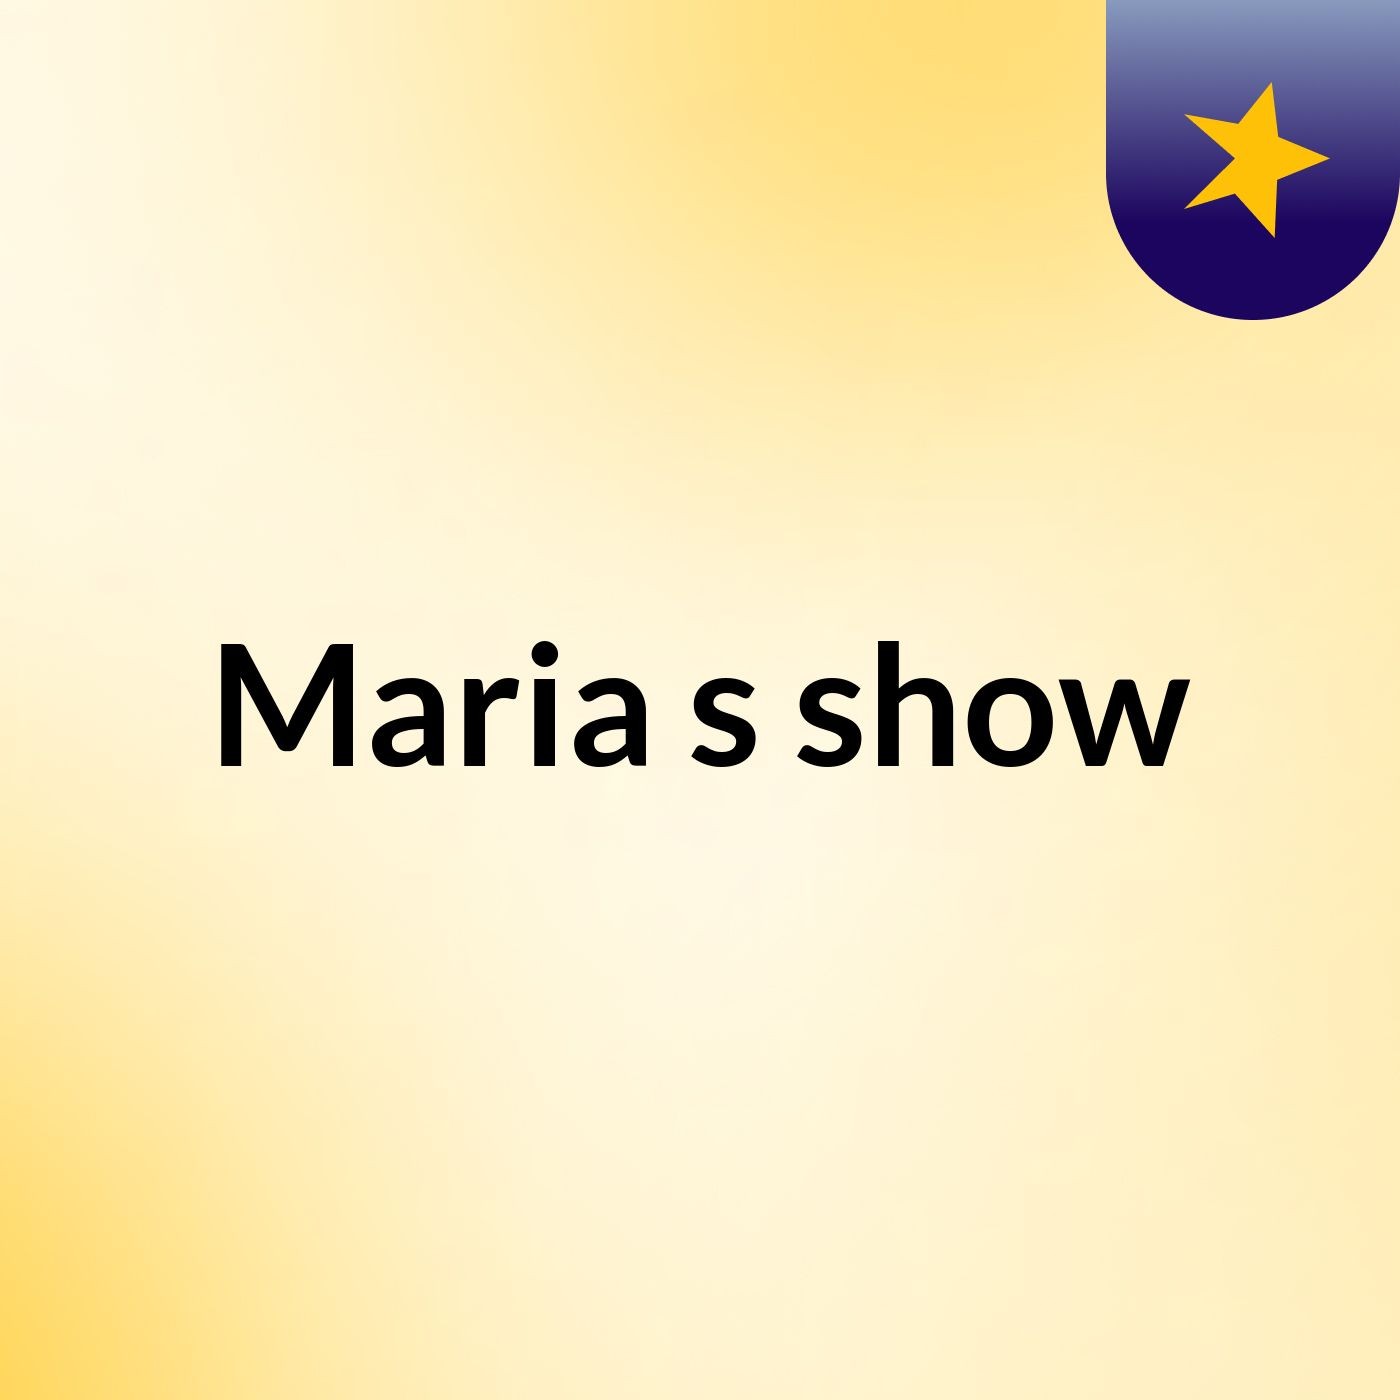 Maria's show